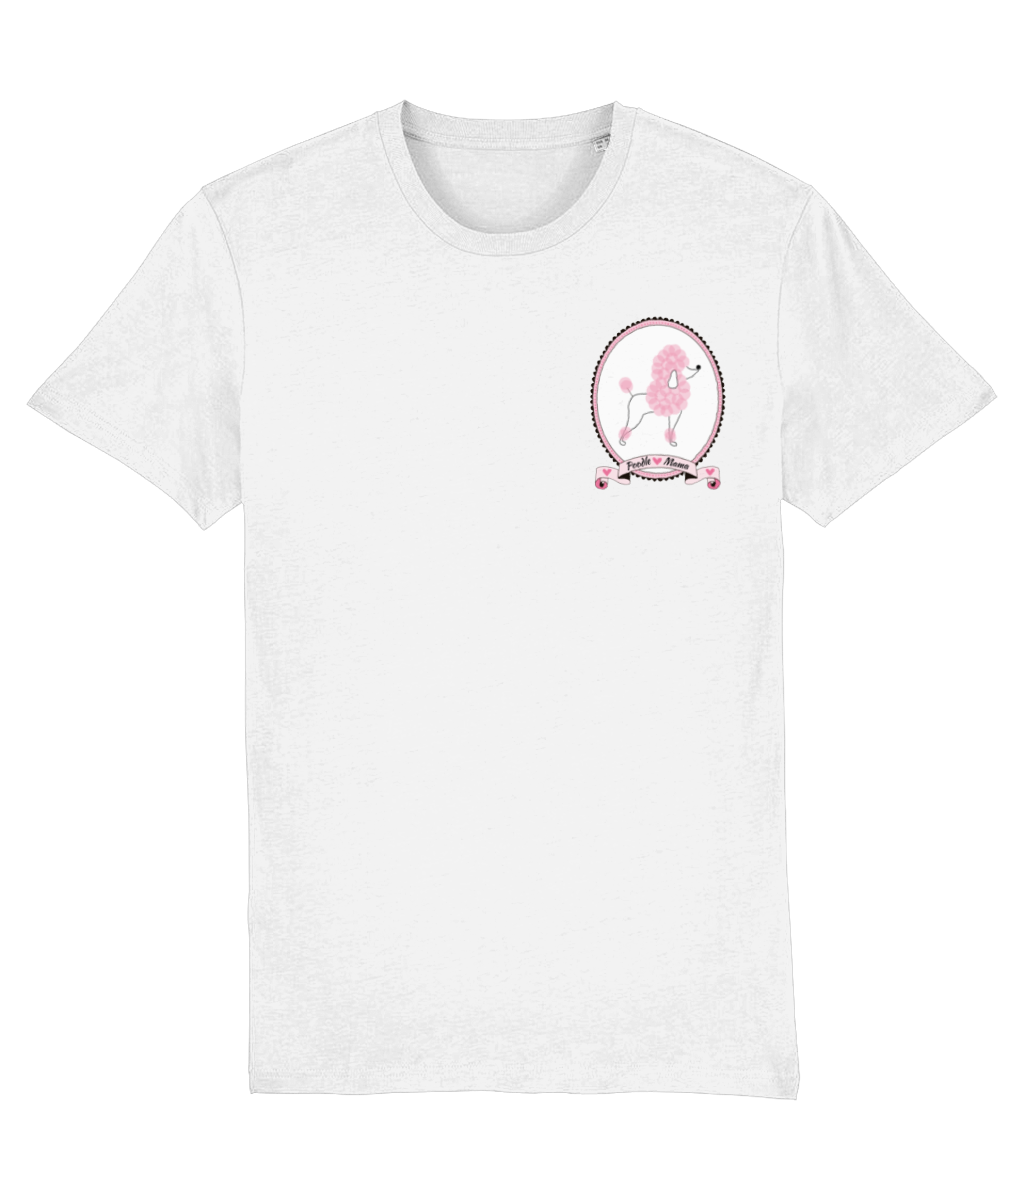 poodle mama t-shirt